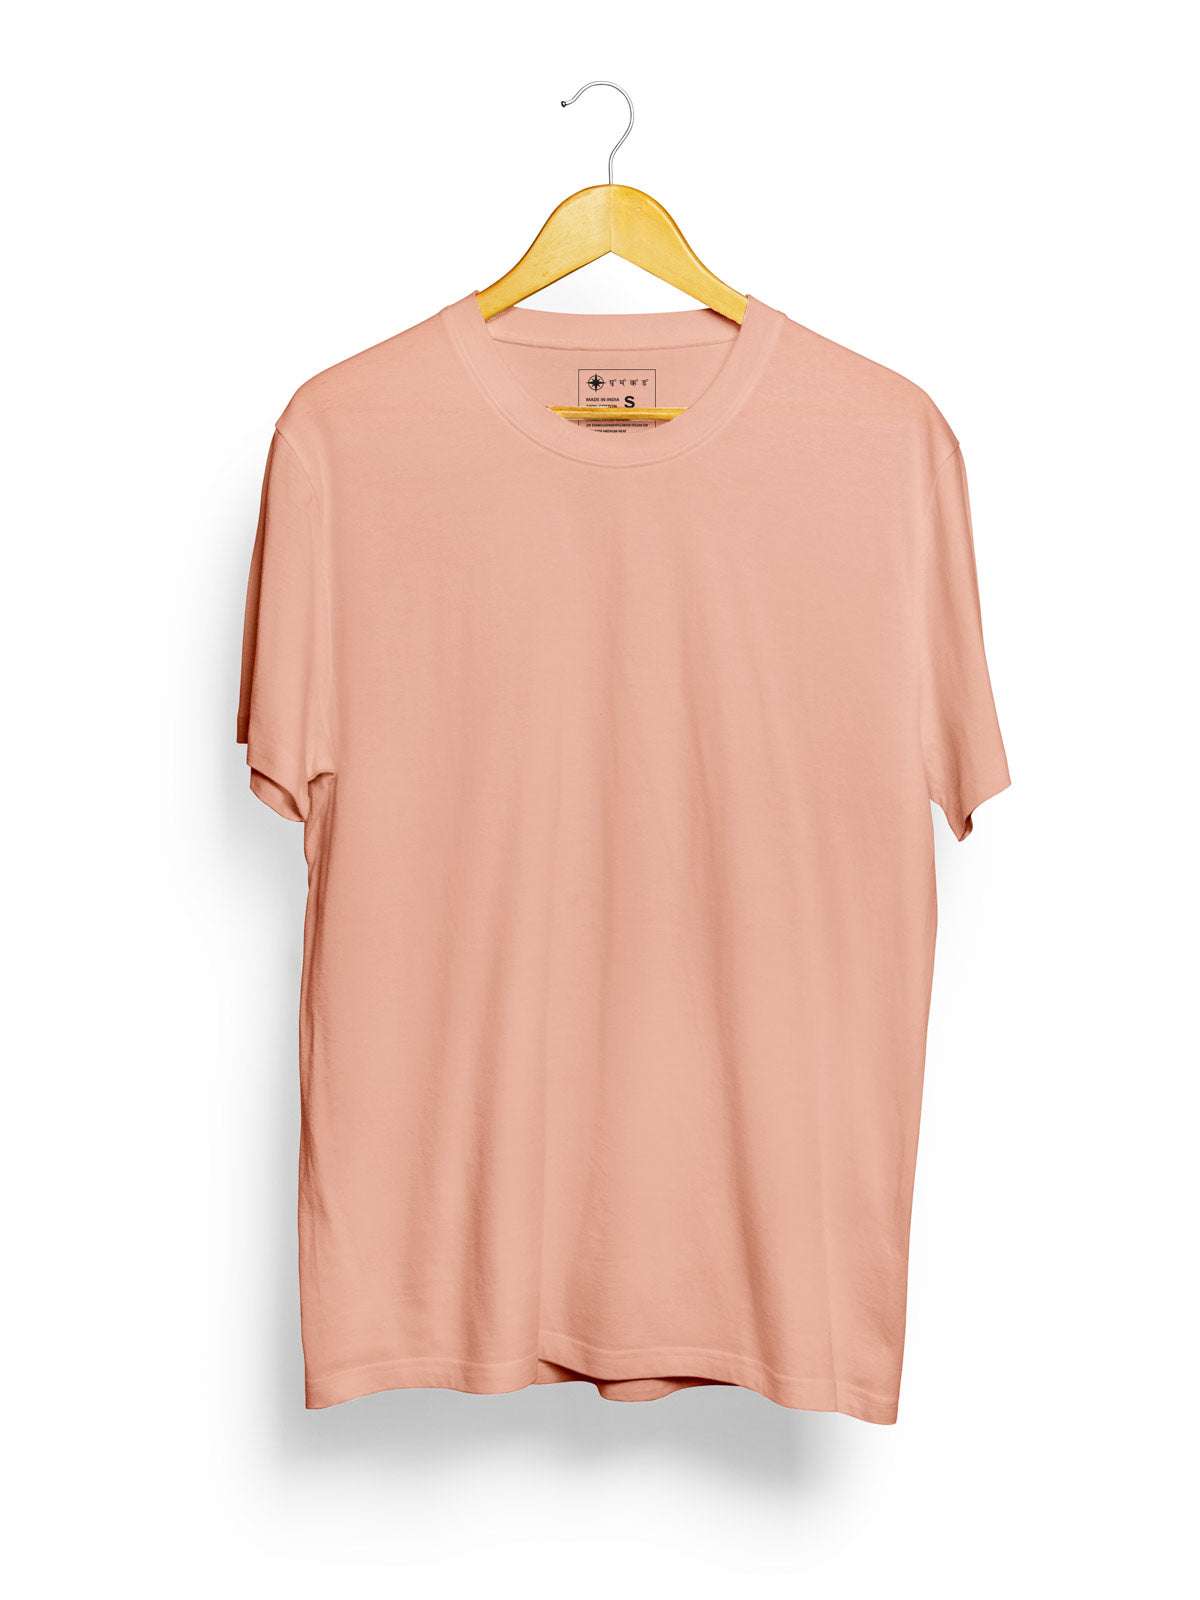 Pack of 3 | Lavender, Peach & Maroon Unisex Plain T shirt